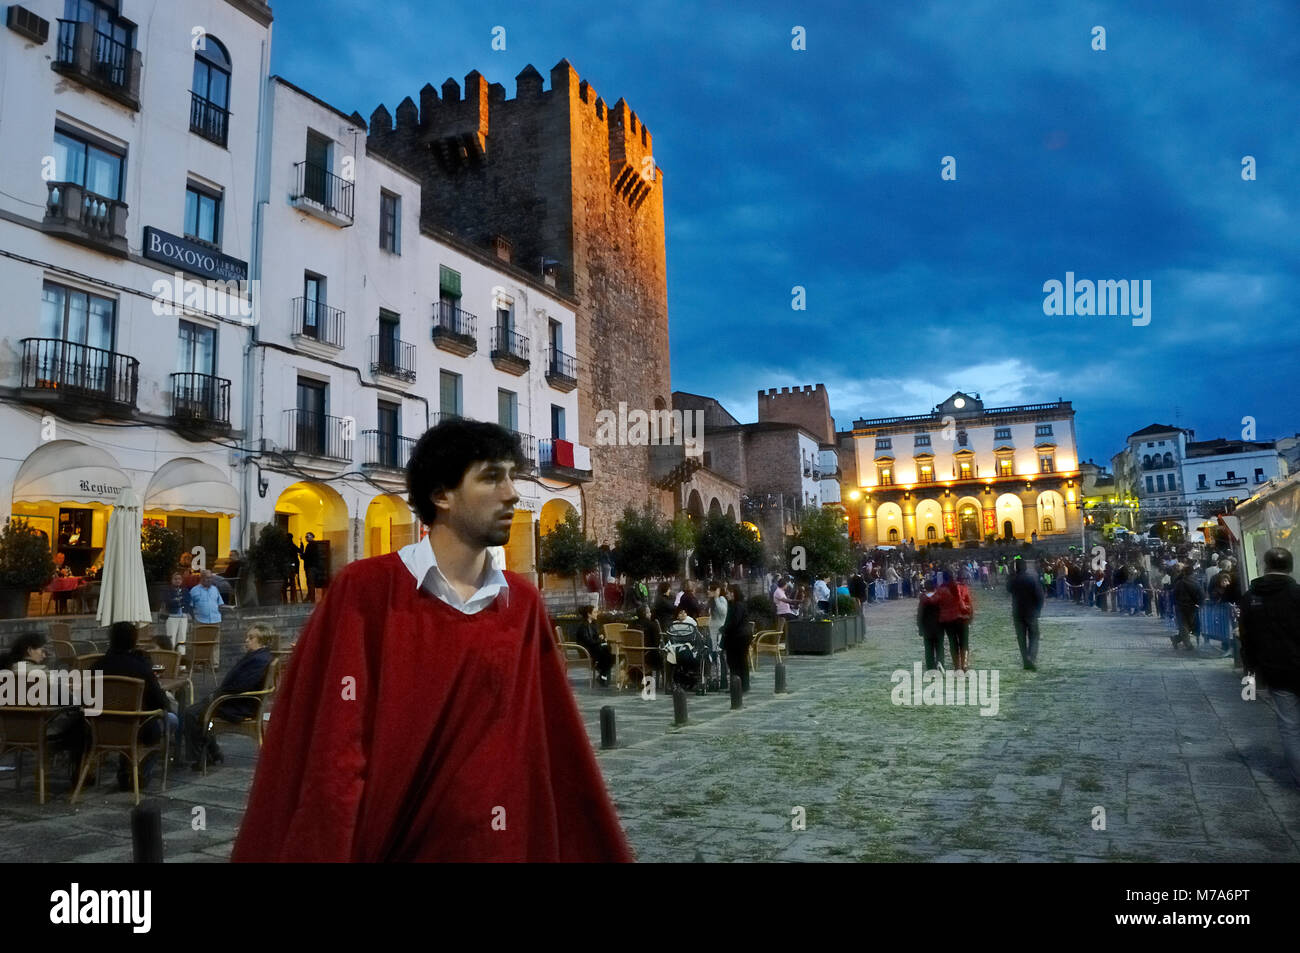 Cáceres, einem UNESCO-Weltkulturerbe. Spanien Stockfoto